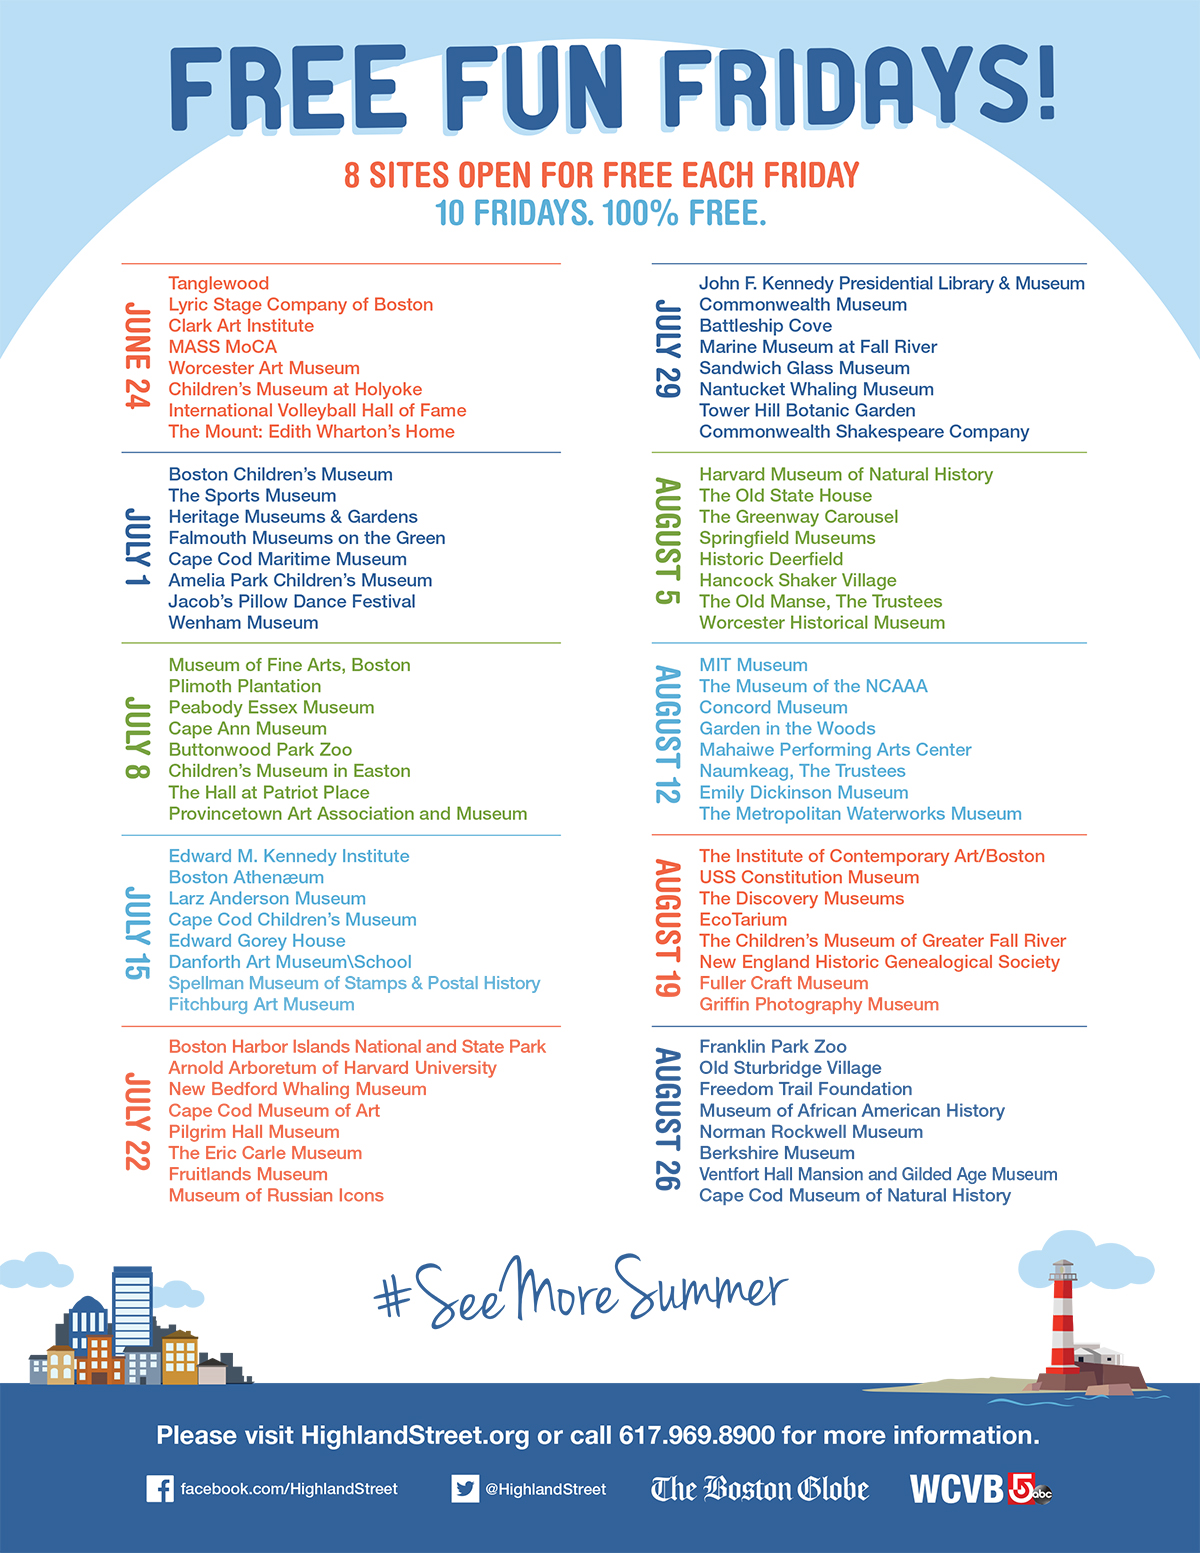 free fun fridays 2016 schedule boston lineup